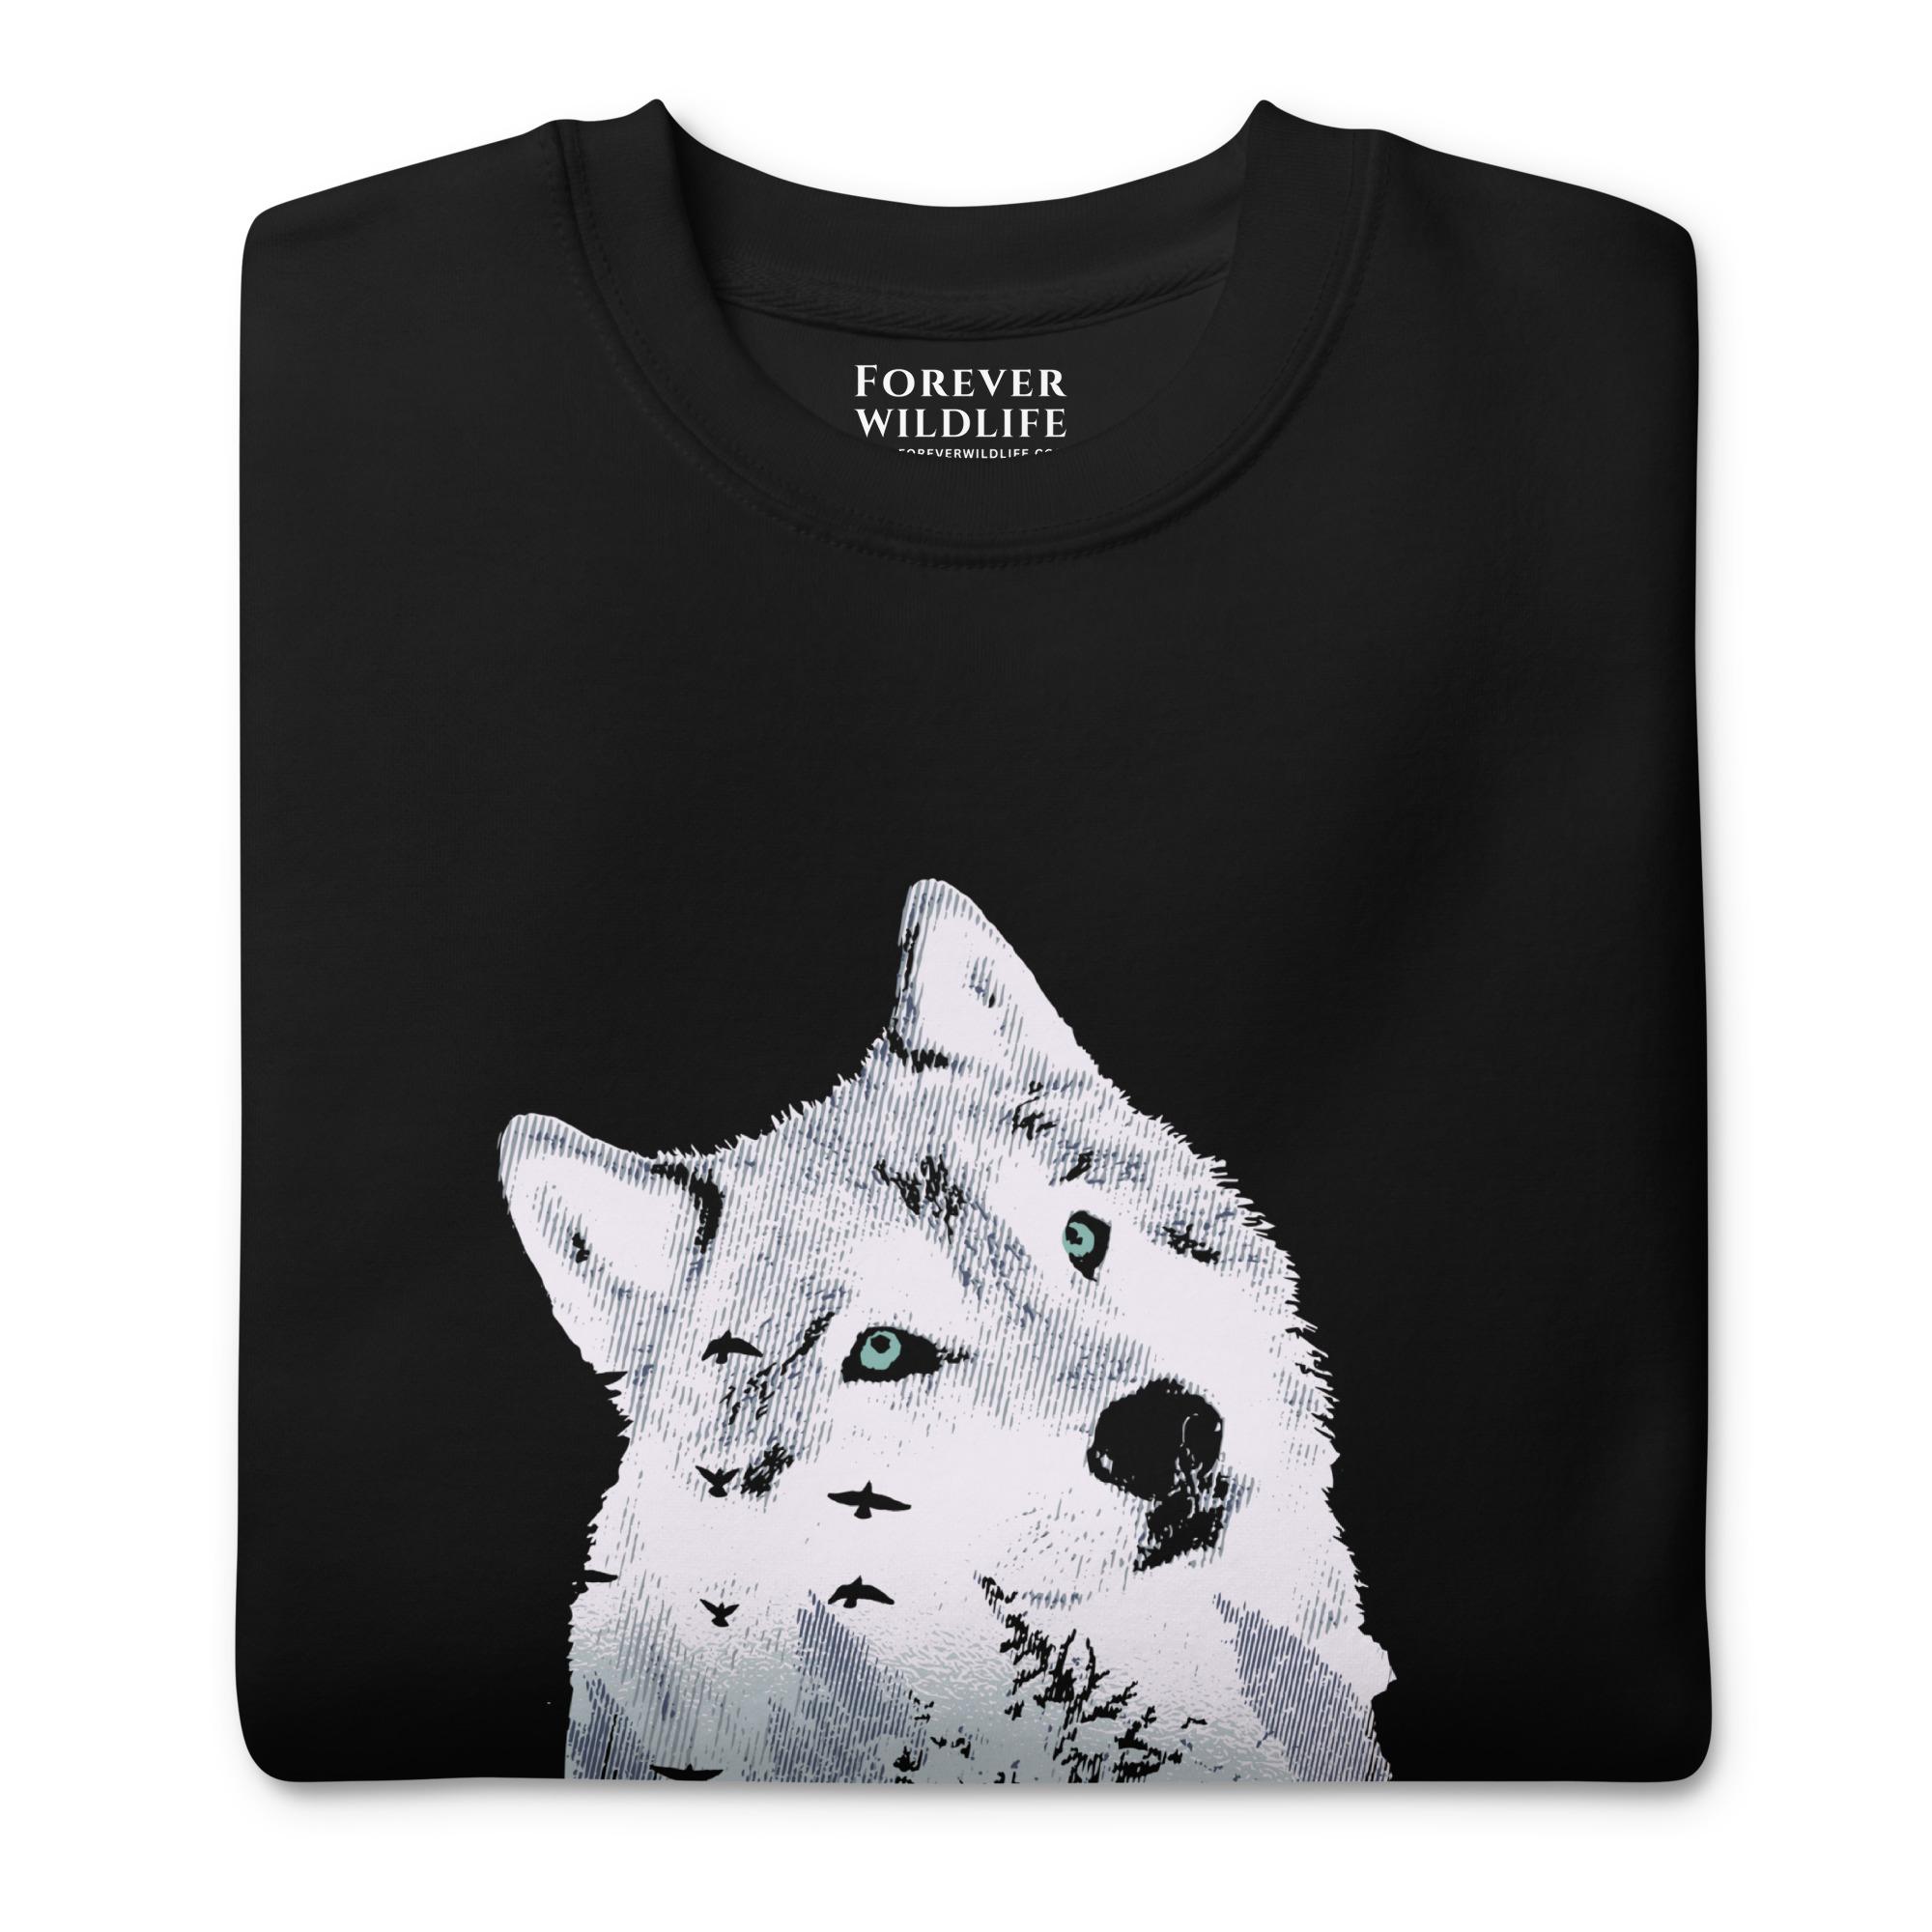 Wolf Sweatshirt in Black-Premium Wildlife Animal Inspiration Sweatshirt Design, part of Wildlife Sweatshirts & Clothing from Forever Wildlife.